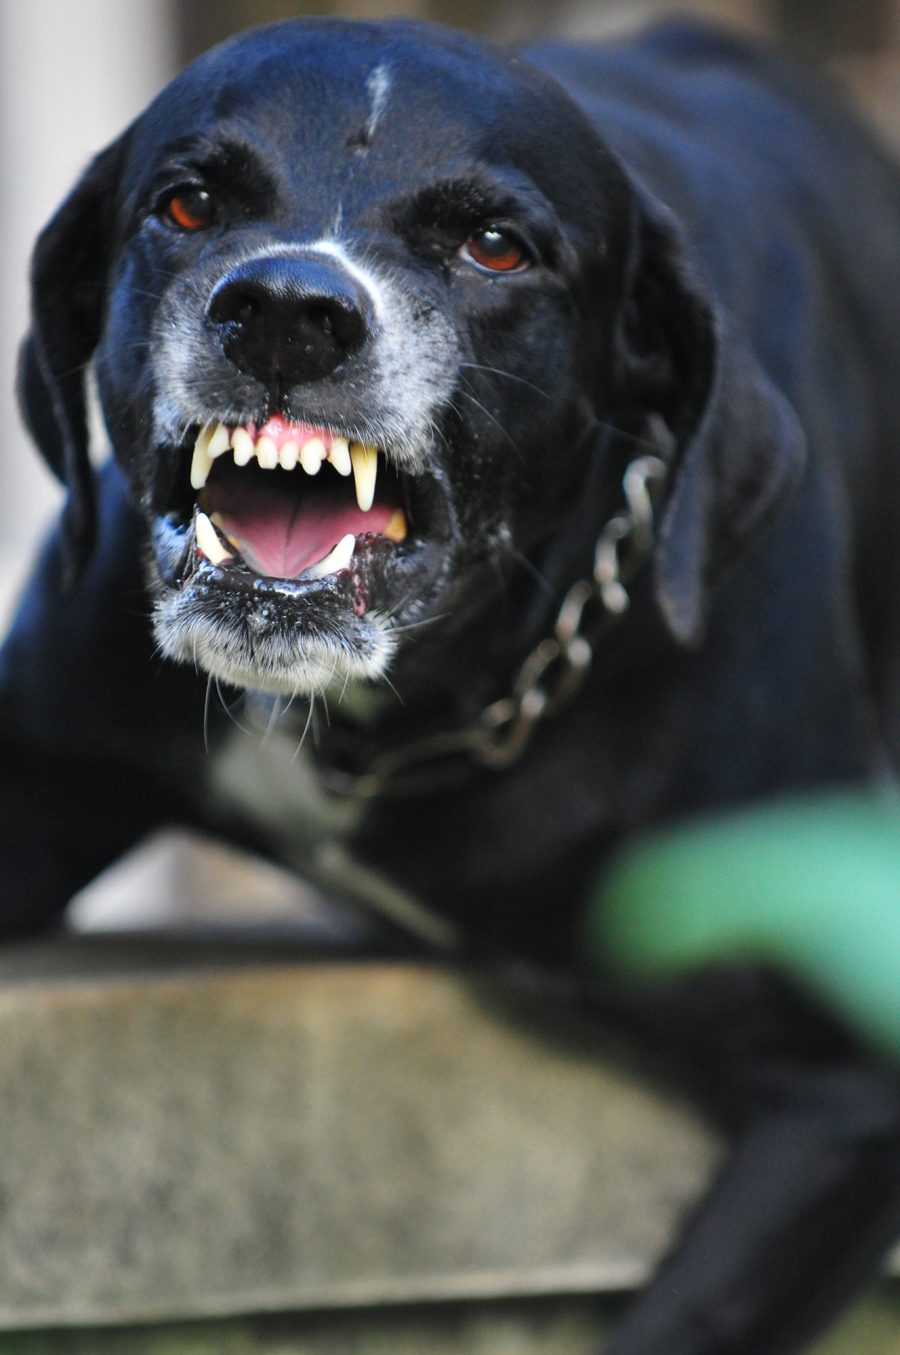 Closeup of a scary black dog